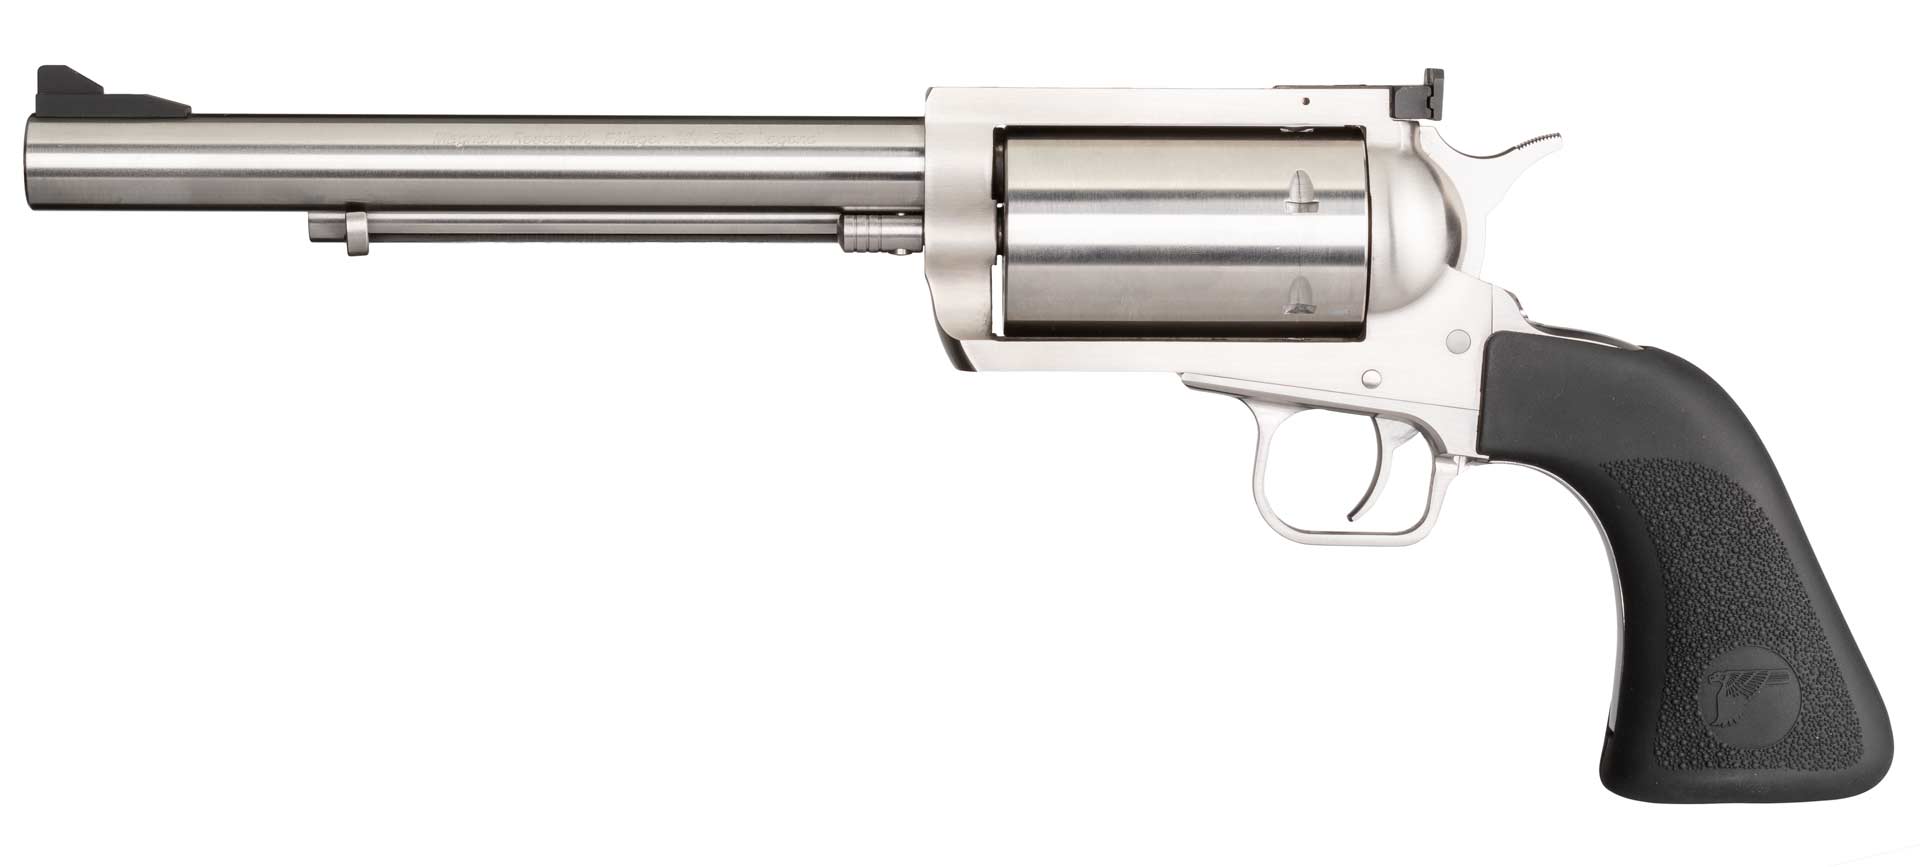 Magnum Research Big Frame Revolver BFR left-side view stainless steel gun black grips stocks